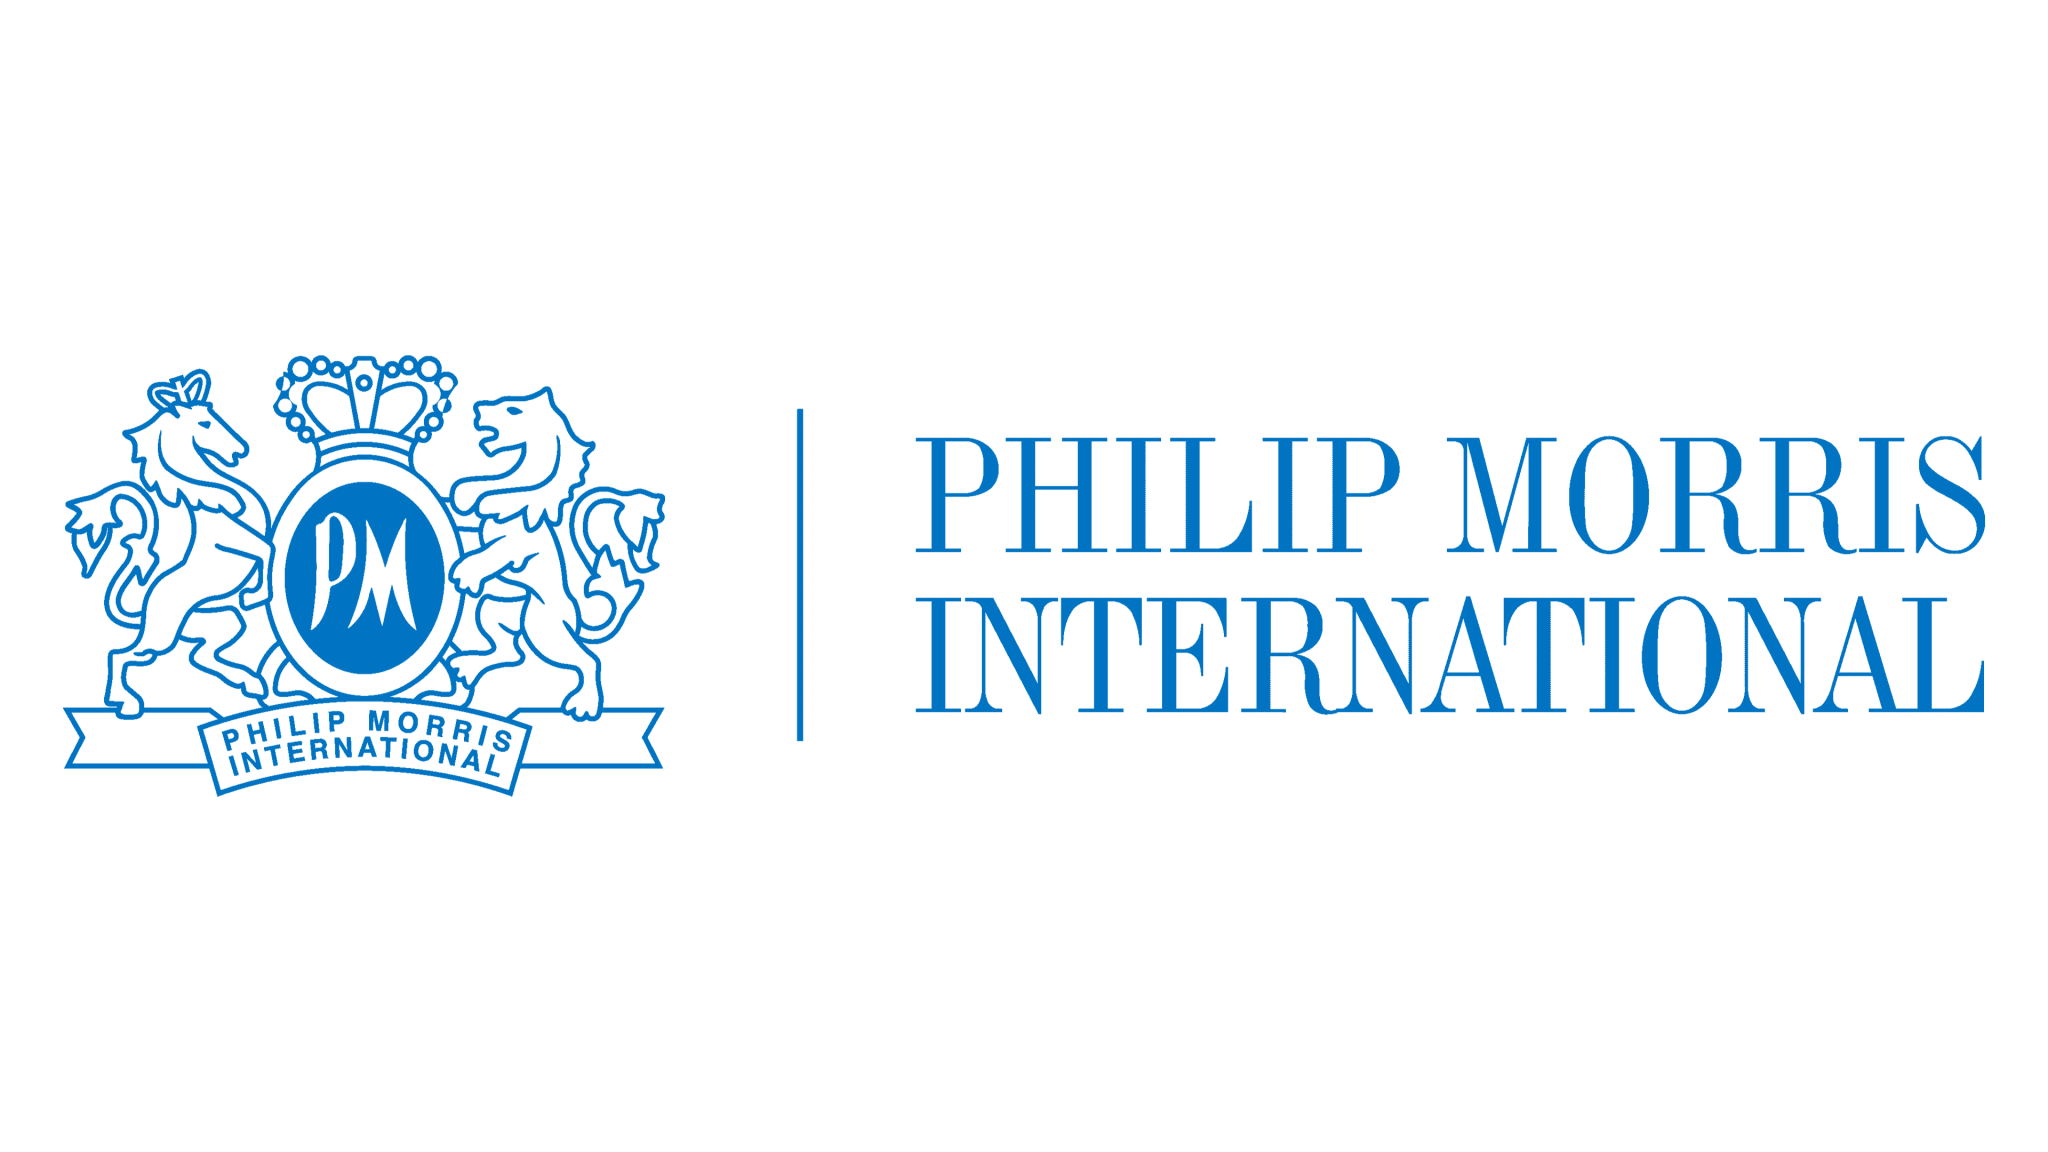 Philip Morris International Logo Png Image Purepng Fr - vrogue.co